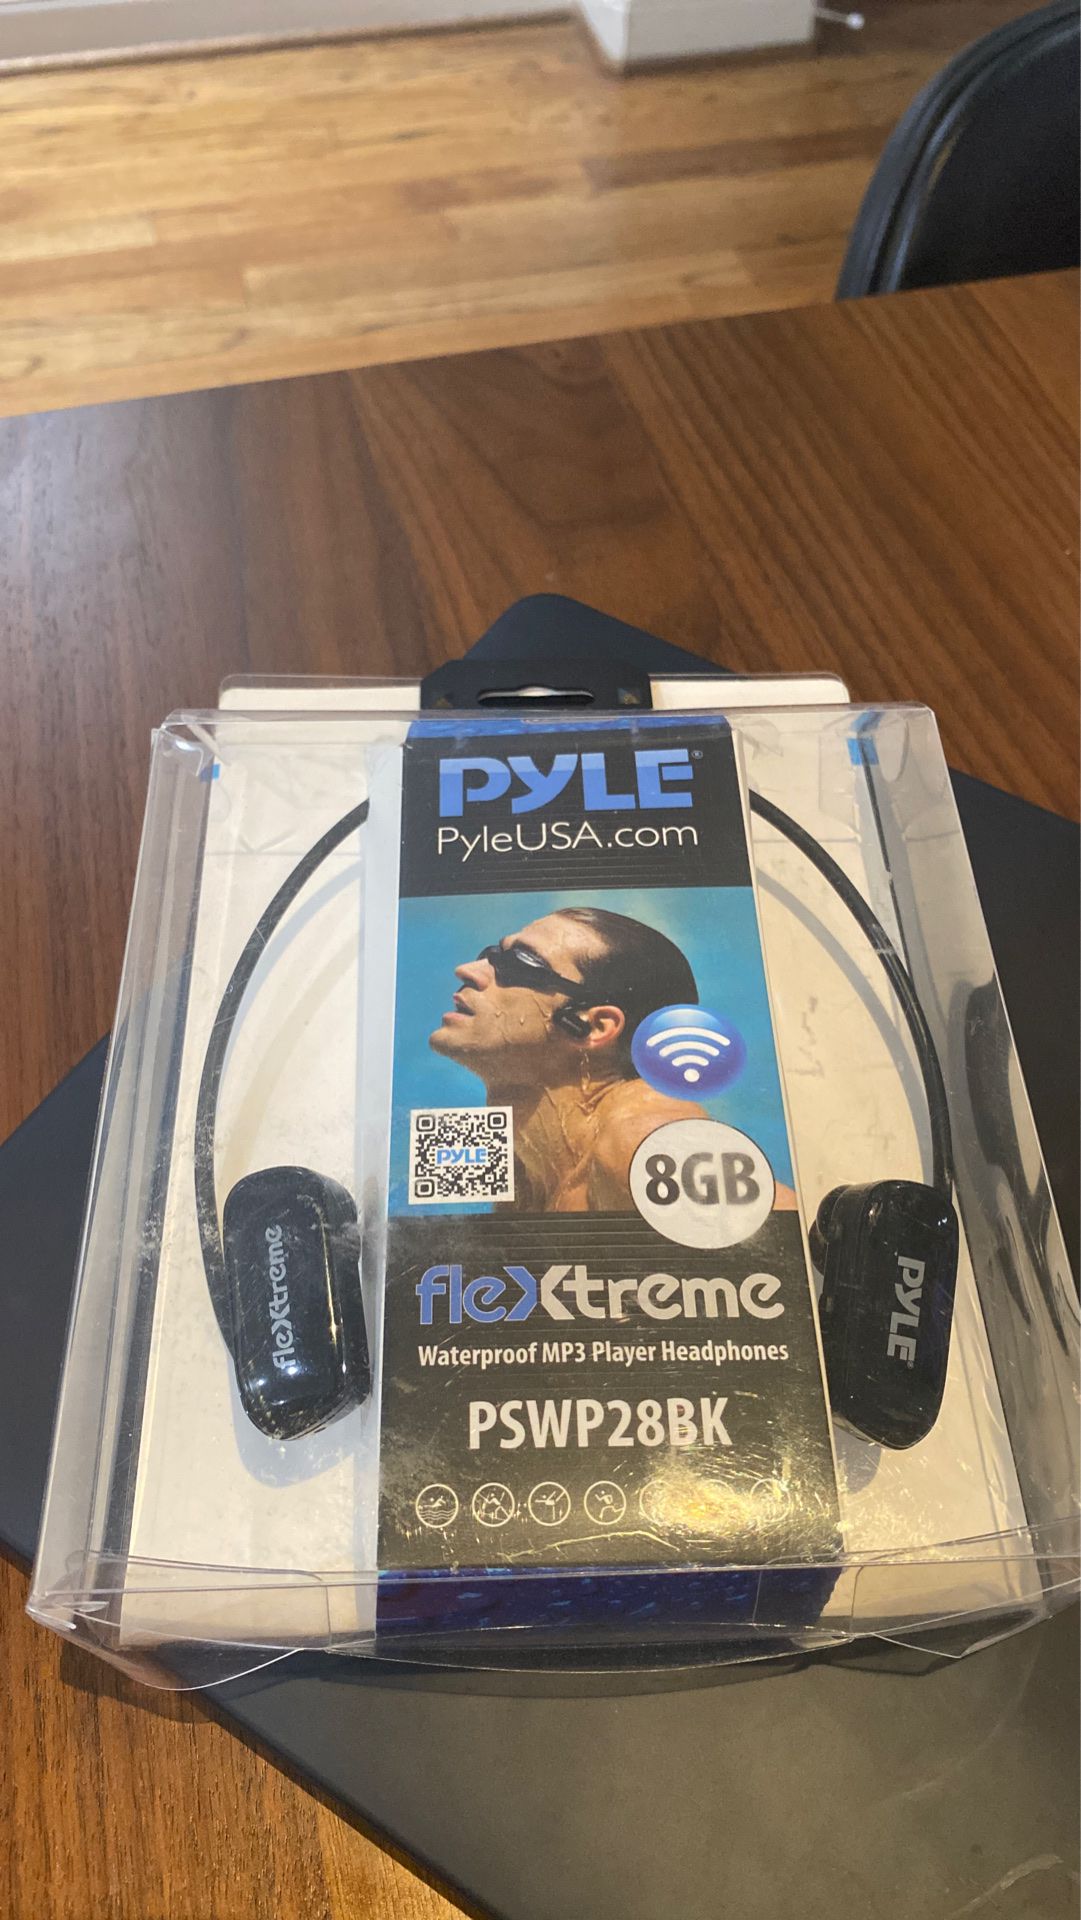 Pyle Flextreme Waterproof MP3 Player